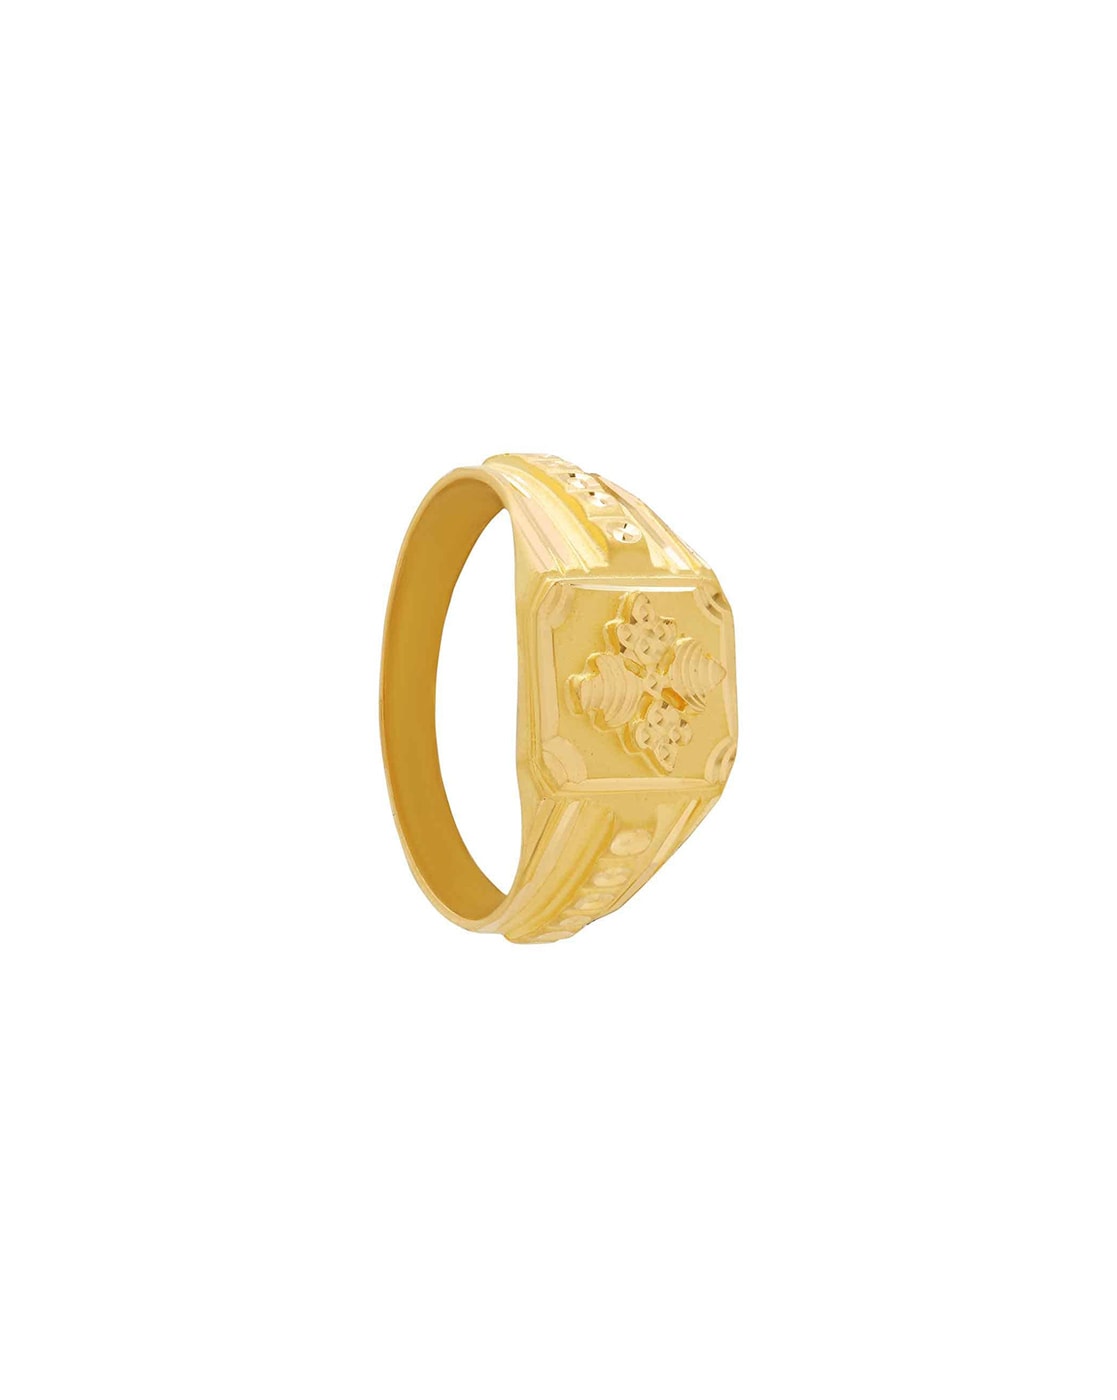 morir 2PC/Set Gold/Silver Plated Engraved Rajmudra The Royal Seal of  Shivaji Maharaj Adjustable Finger Ring Jewelry for Men Women Girls पीतल  सोना, सिल्वर प्लेटेड रिंग Price in India - Buy morir 2PC/Set